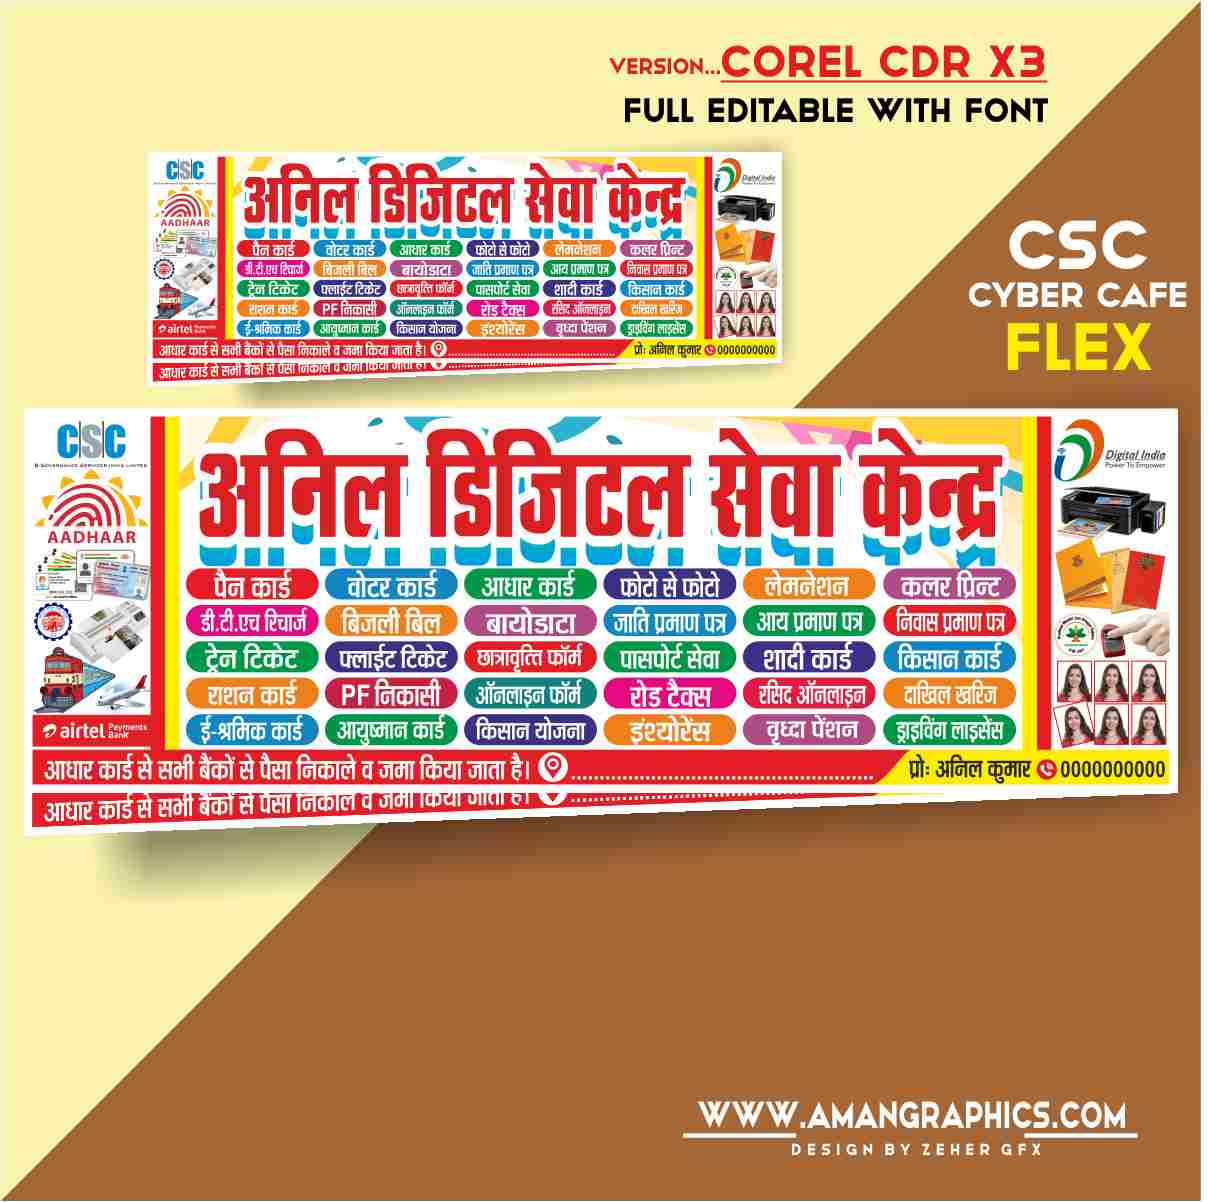 Anil Digital Seva Kendra (CSC) Cyber Cafe Banner Design Cdr File